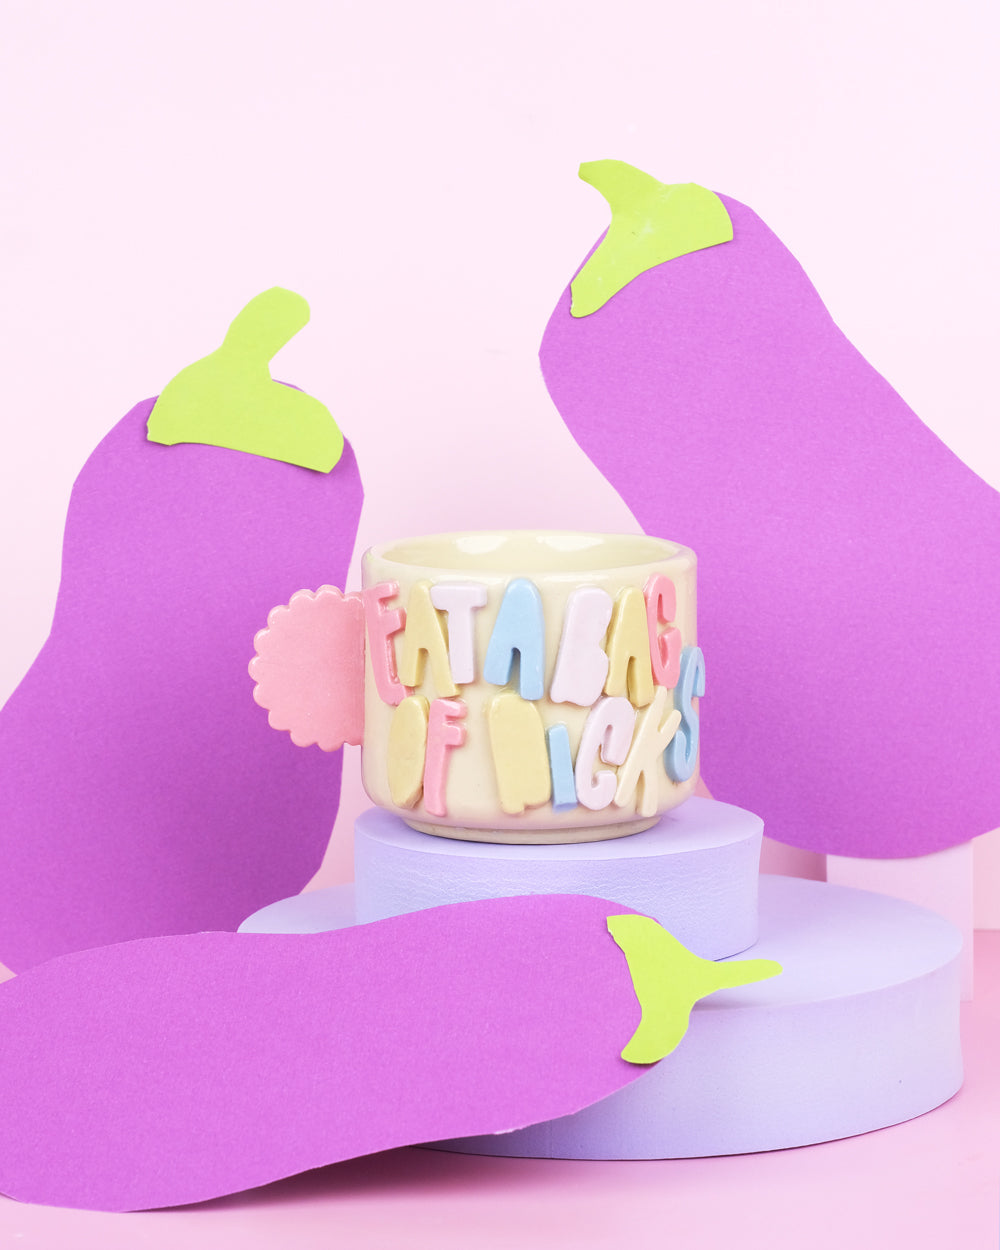 PRE ORDER - Eat a bag of dicks - Teacup mug